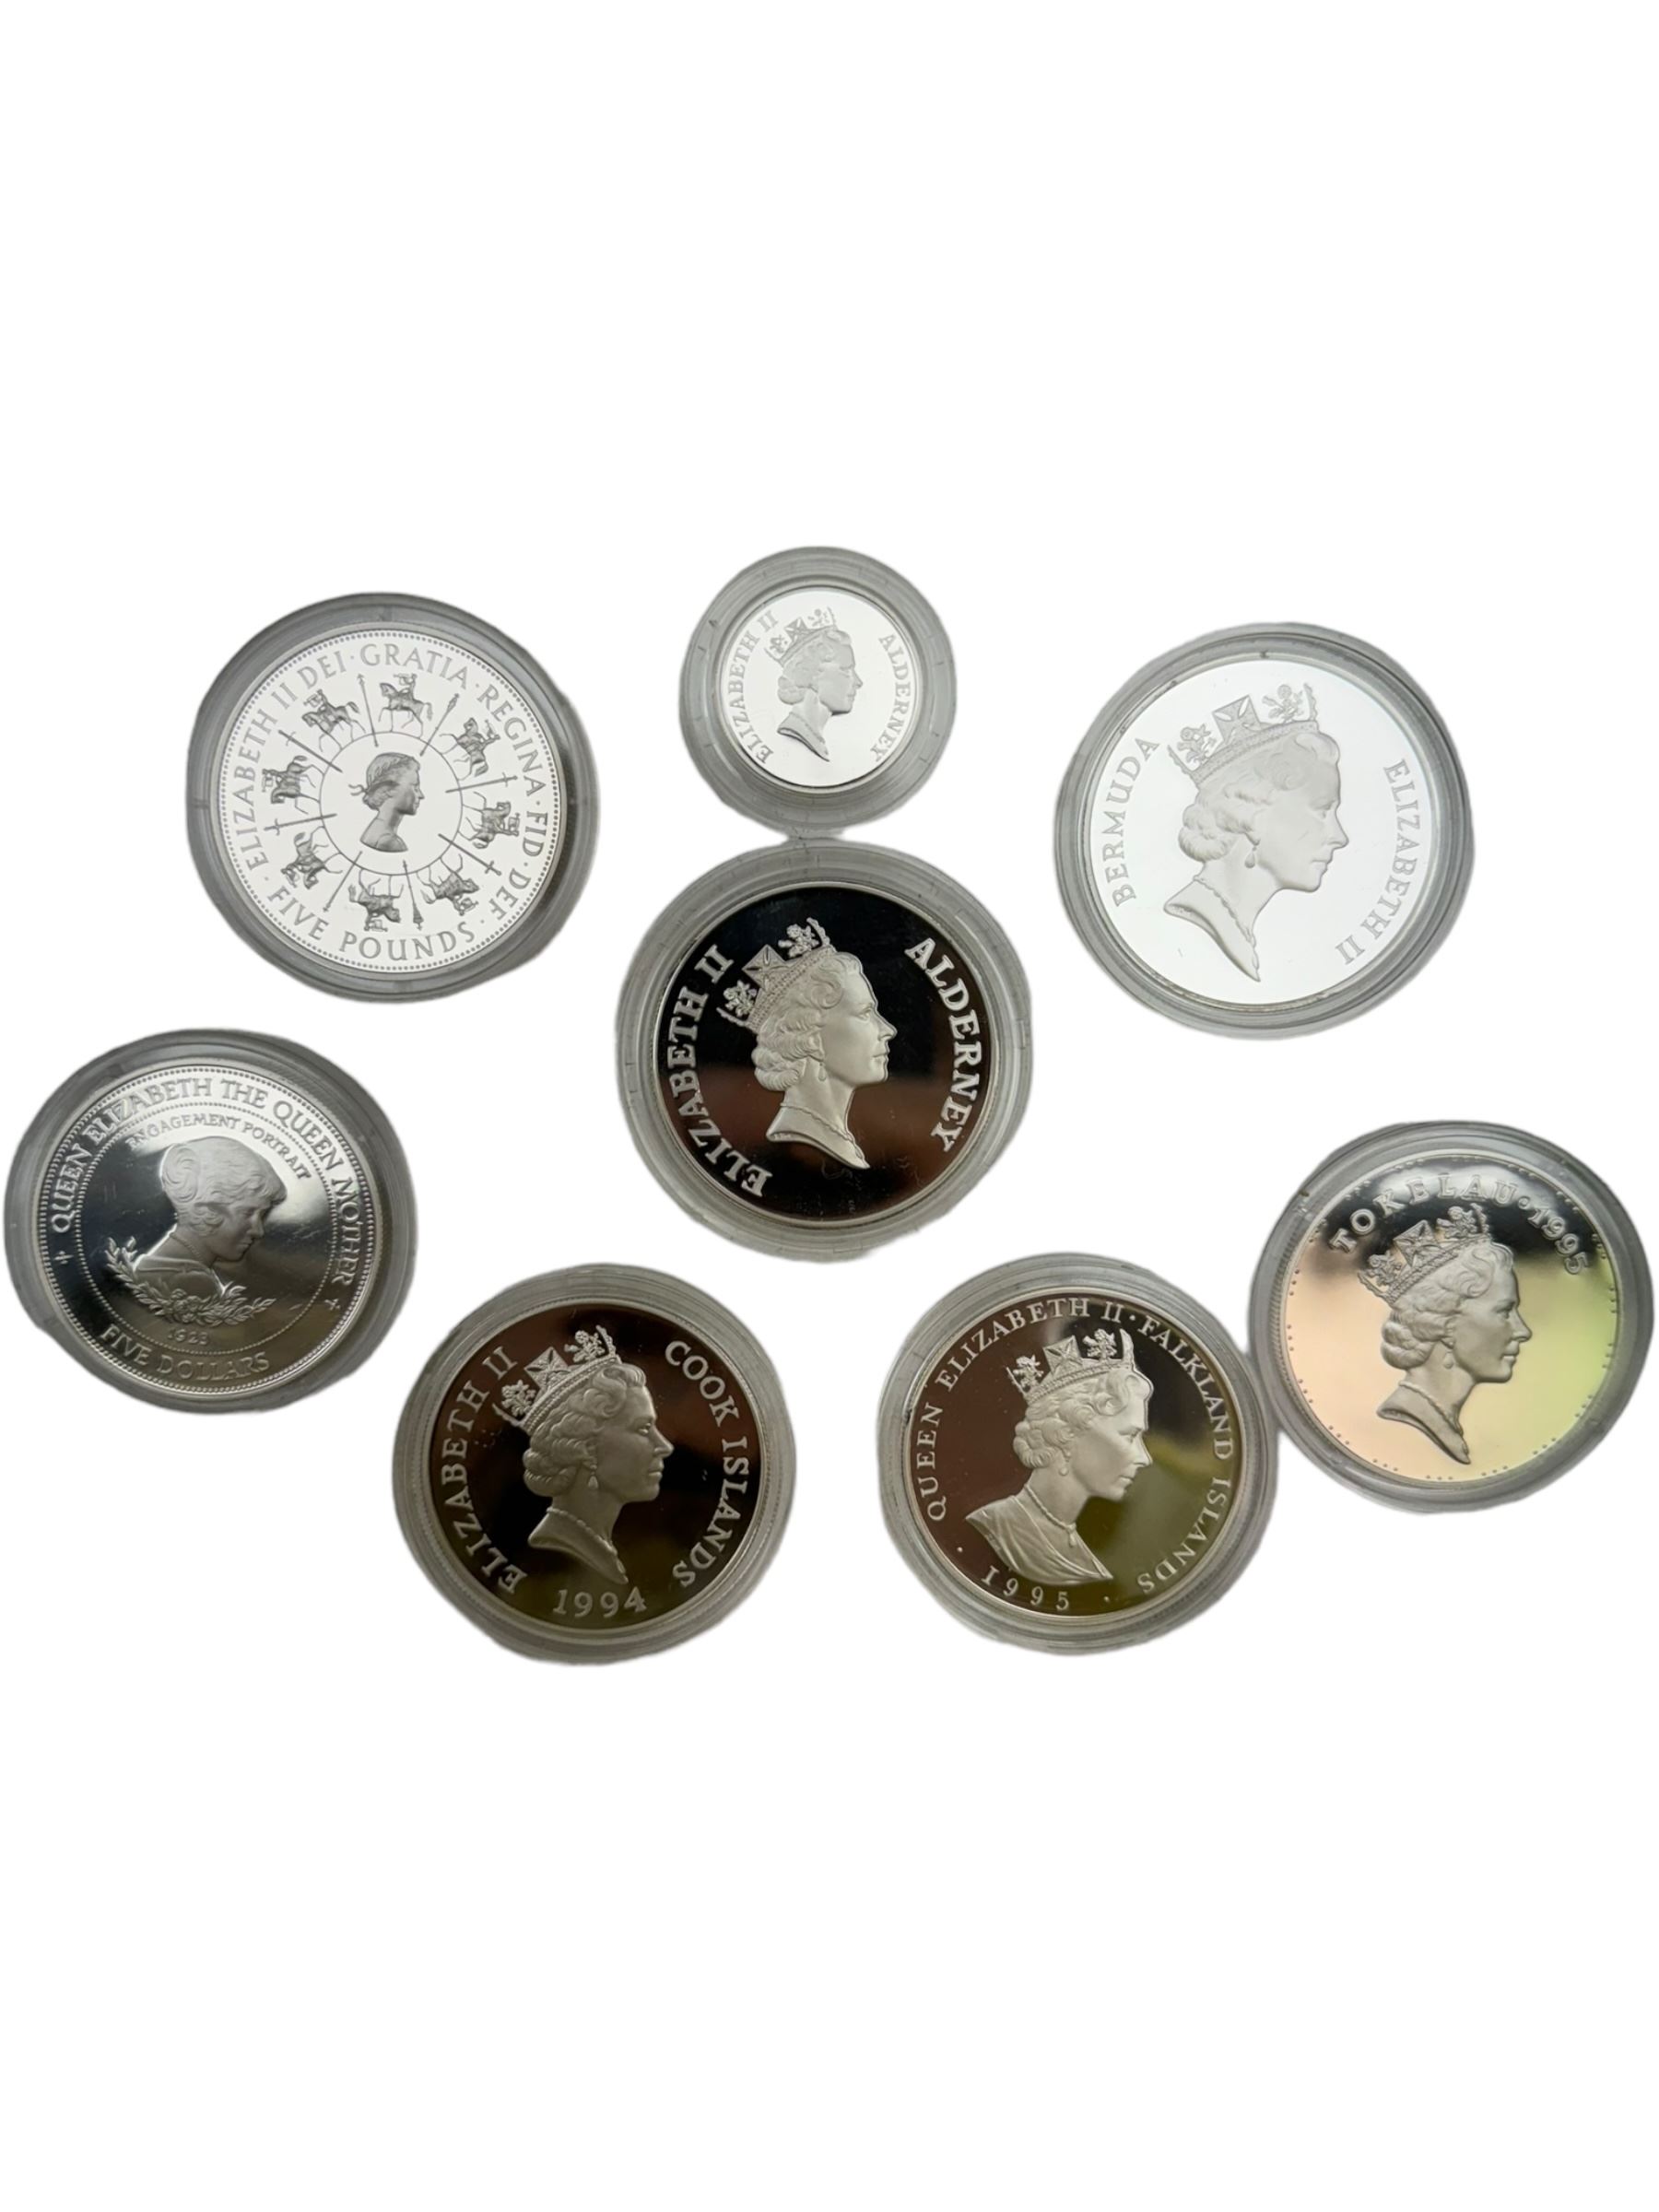 Eight modern silver proof World coins